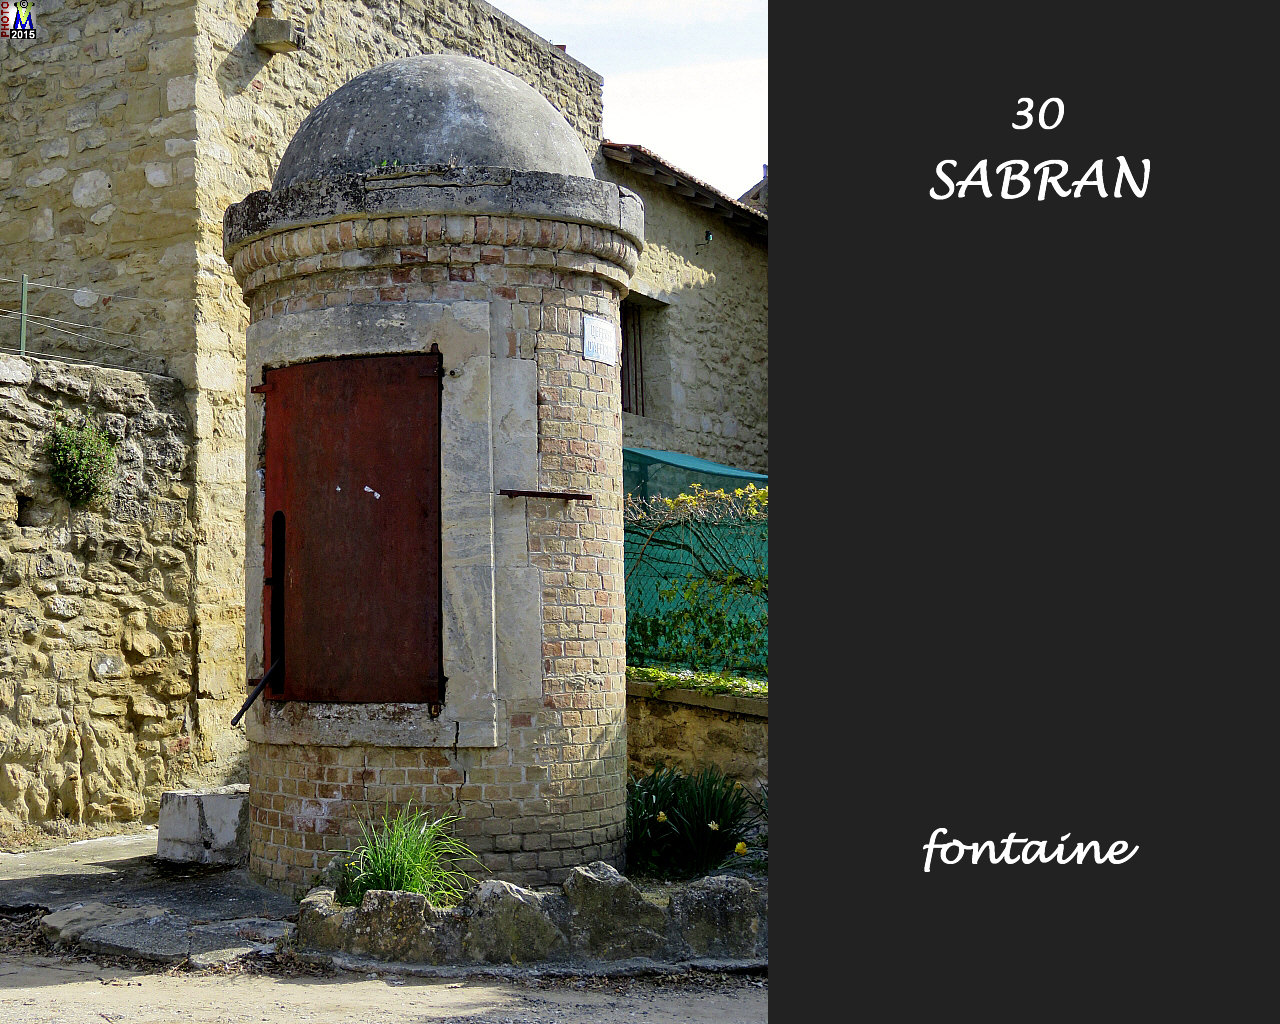 30SABRAN_fontaine_100.jpg